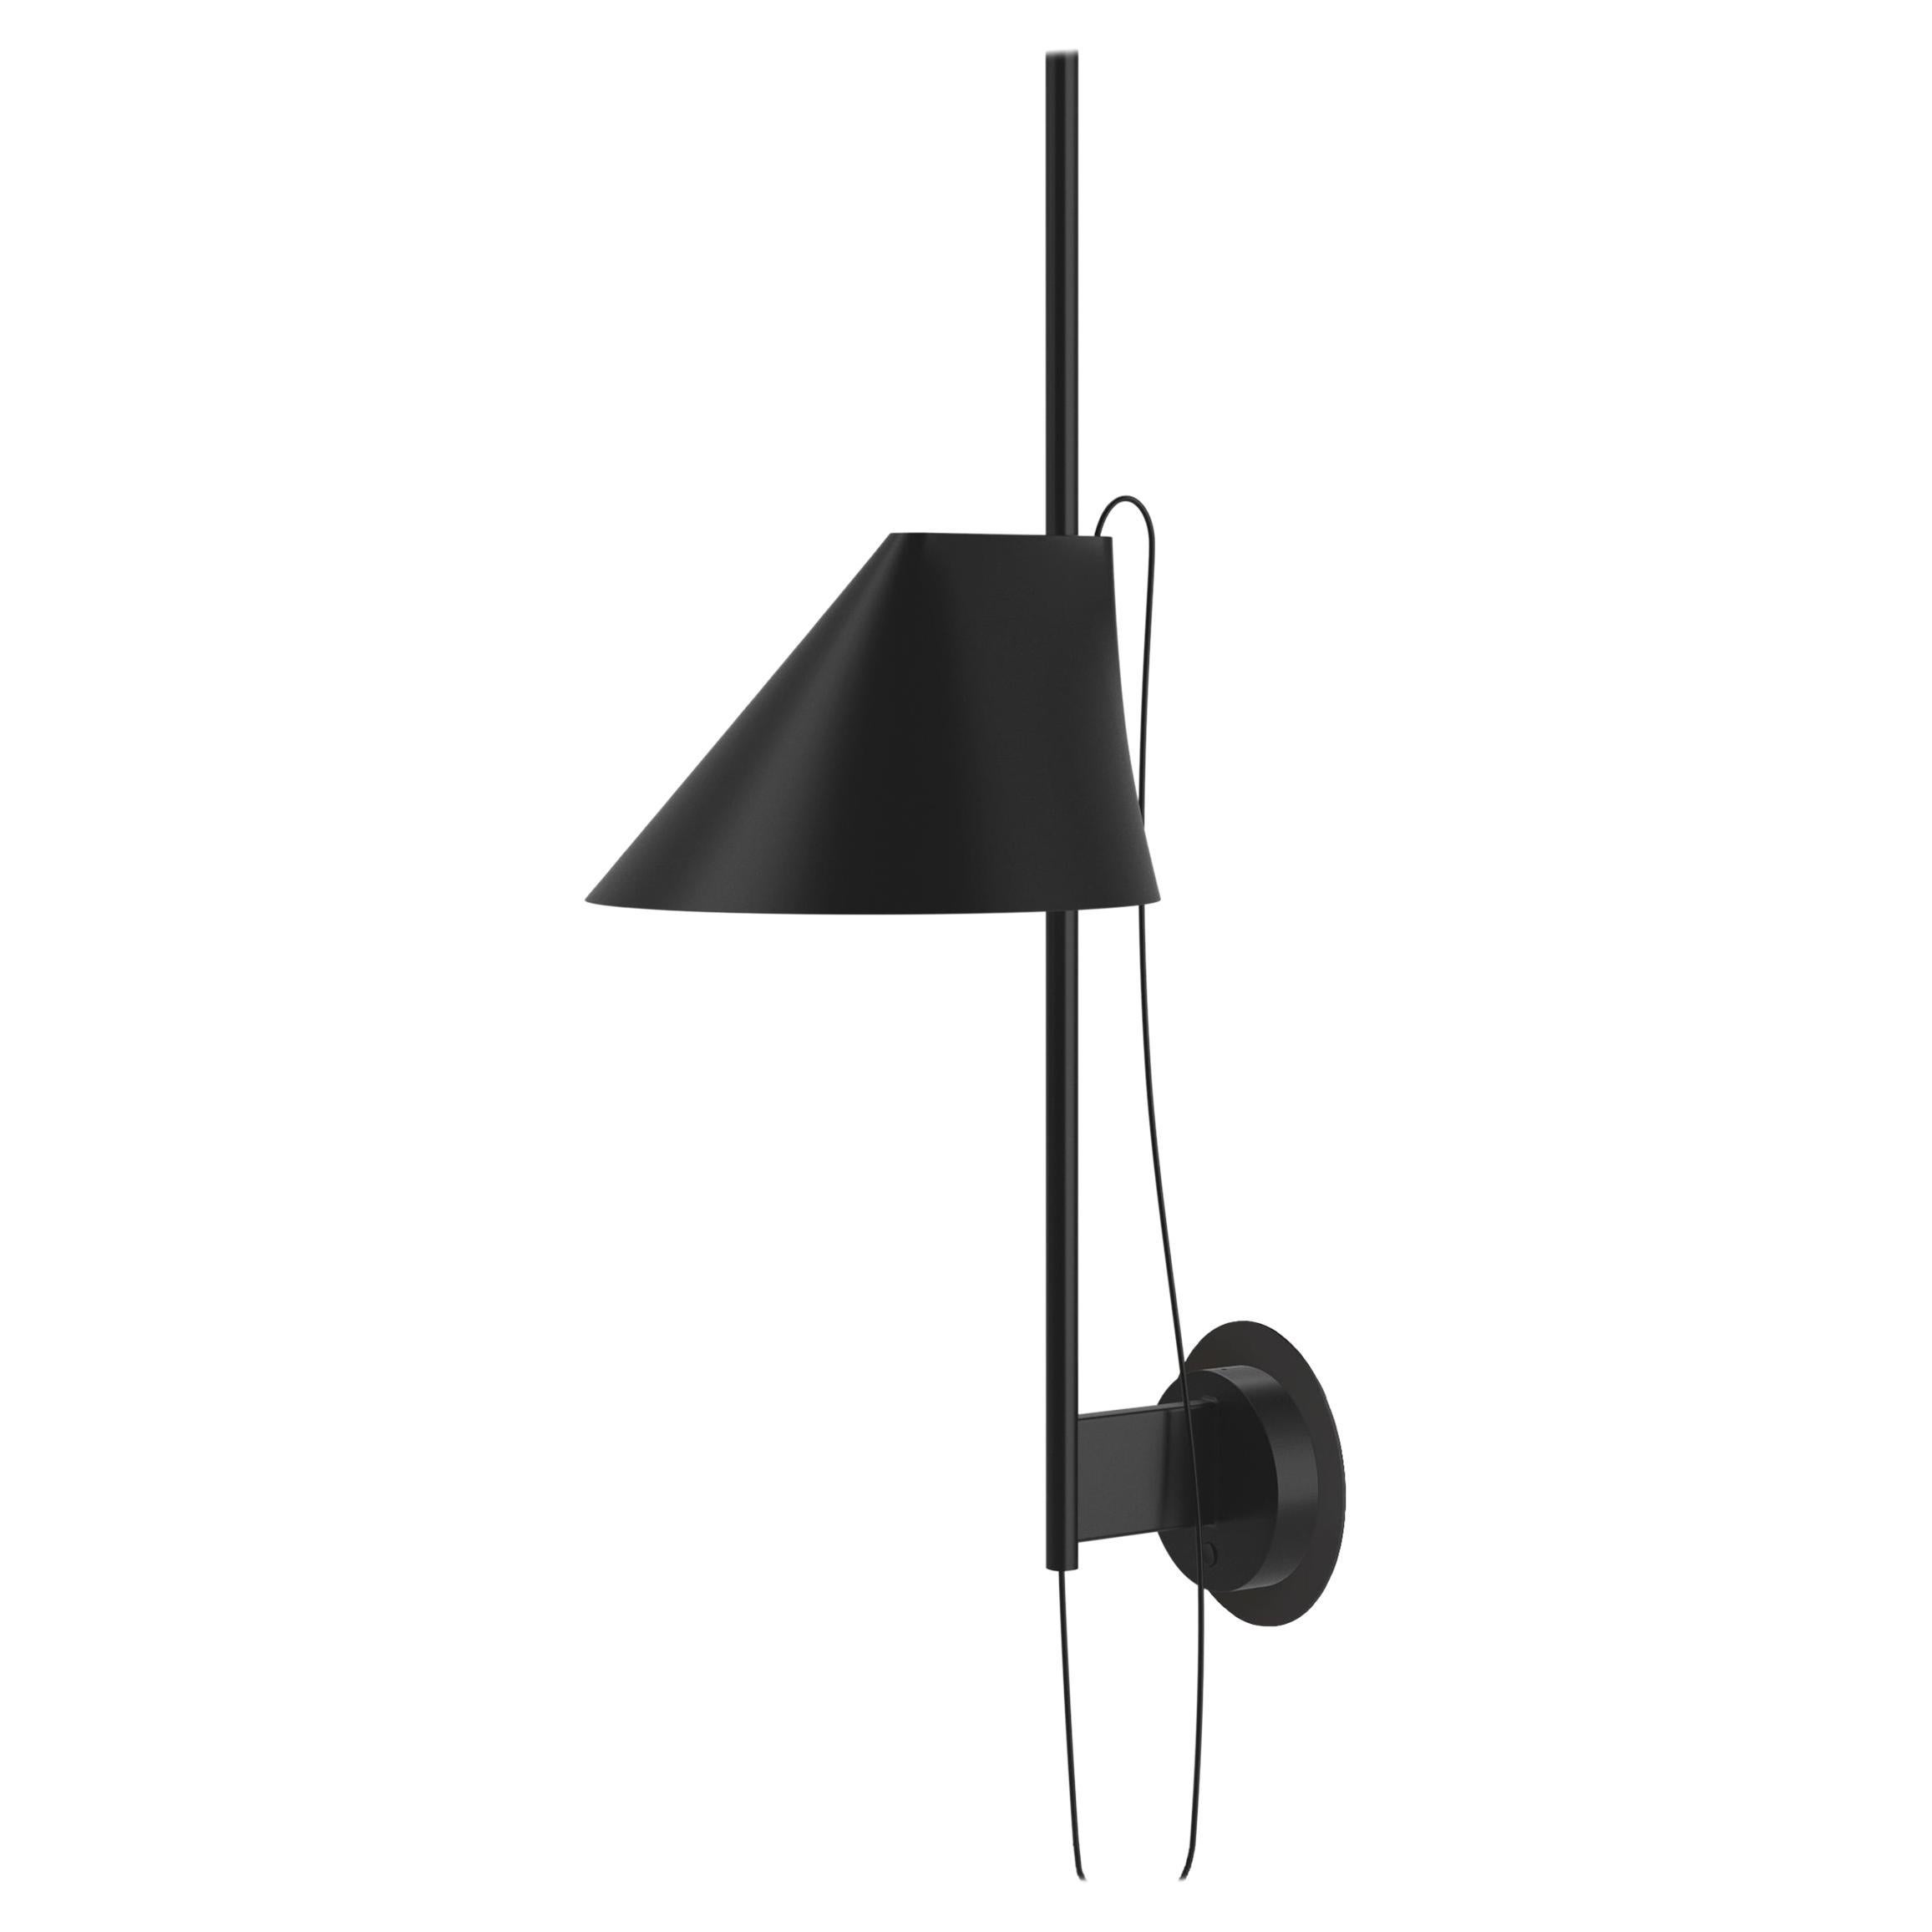 Louis Poulsen Yuh Wall Lamp in Black by GamFratesi